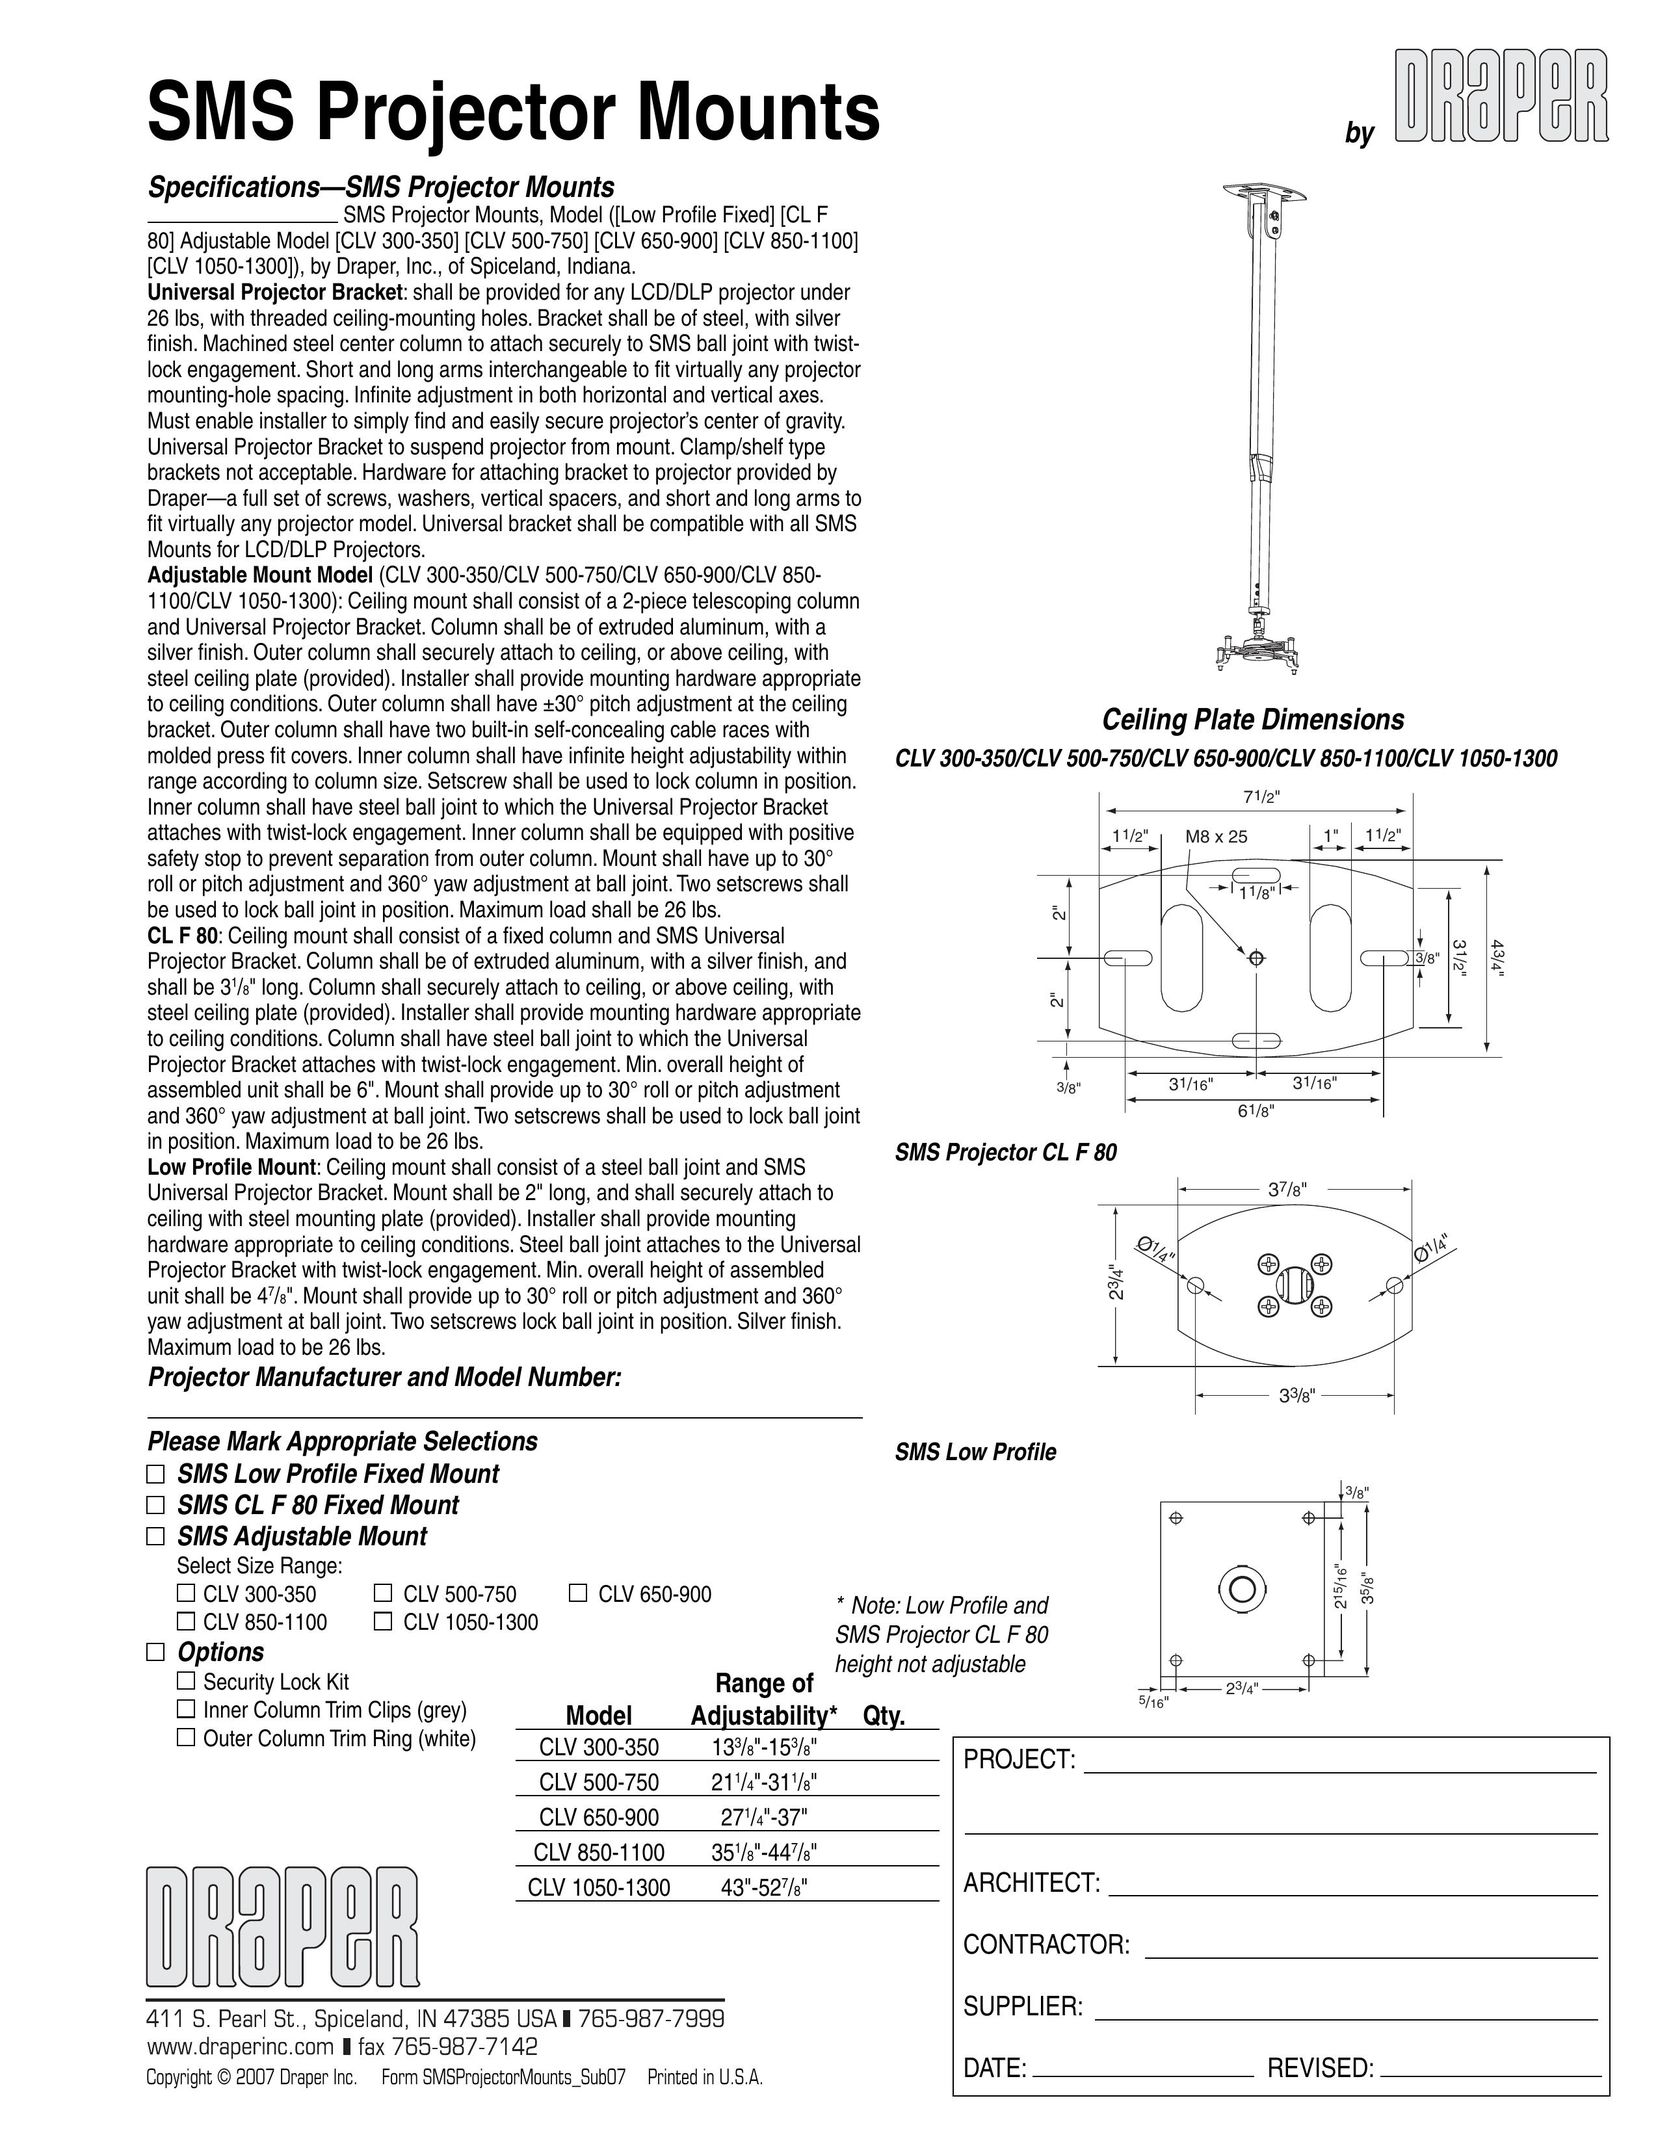 Draper CLV 1050-1300 Projector User Manual